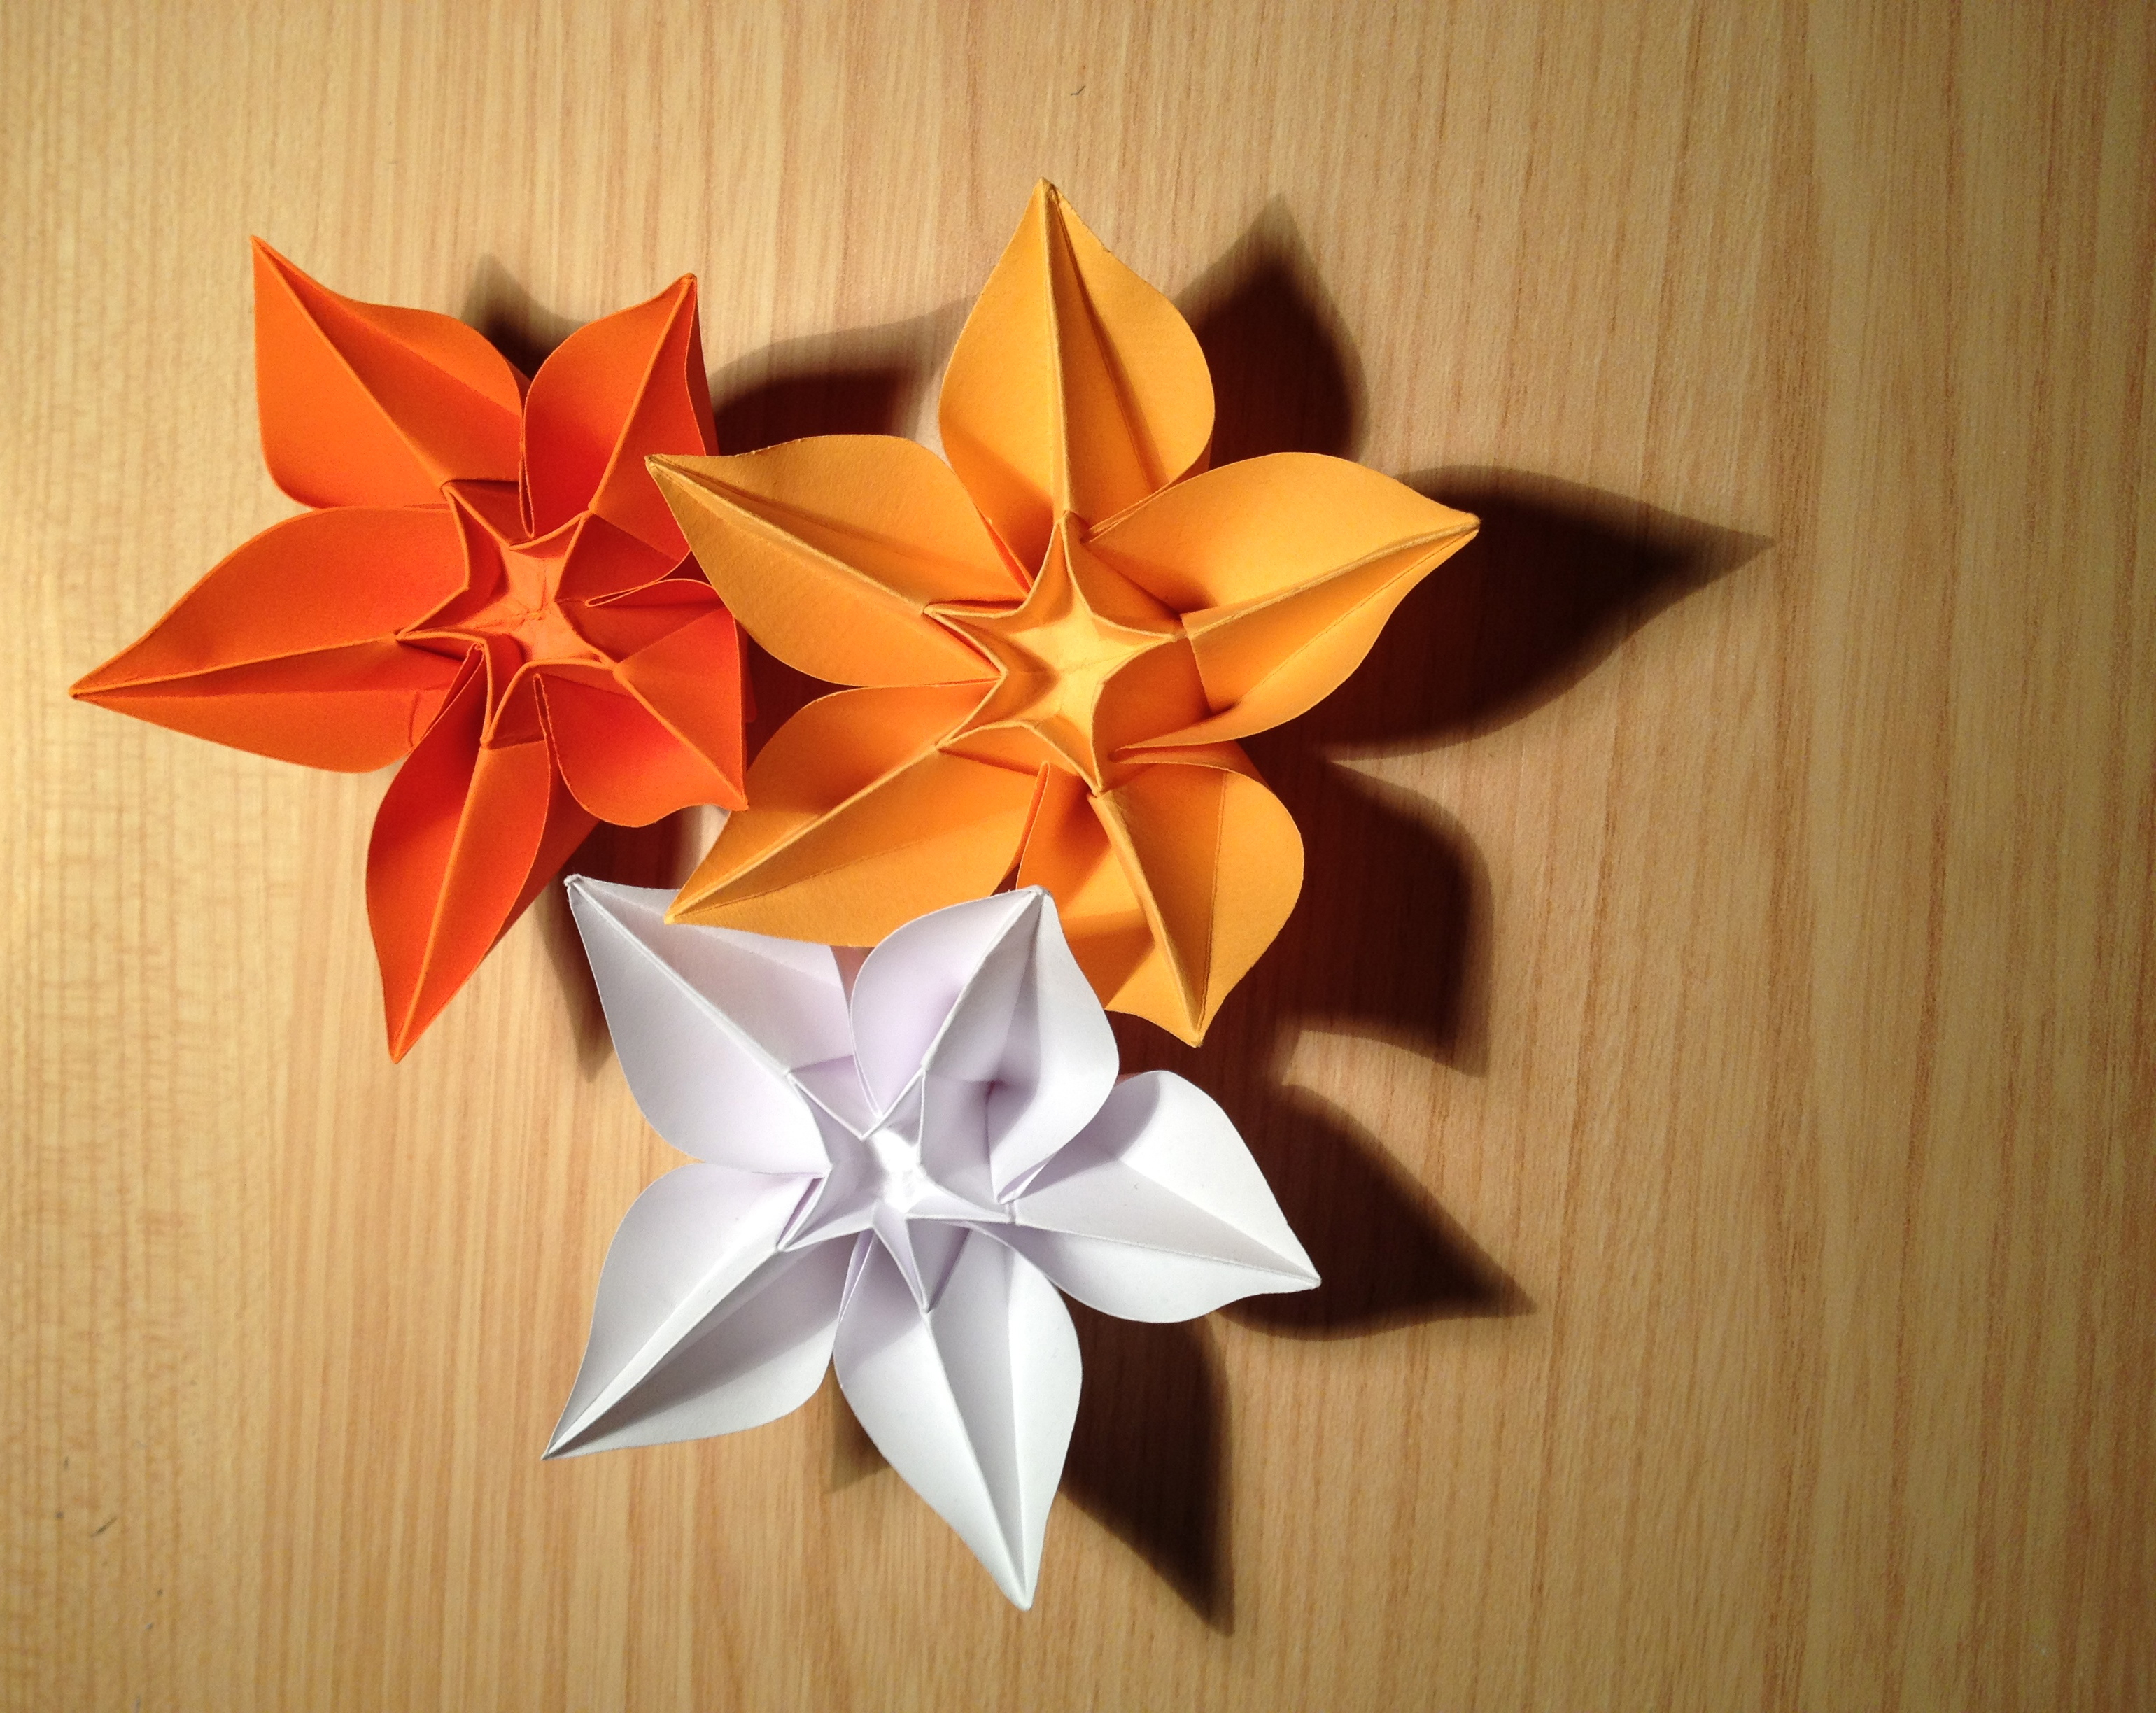 Origami Sculpture Art History Of Paper Sculpture The Art Of Paper Sculpture